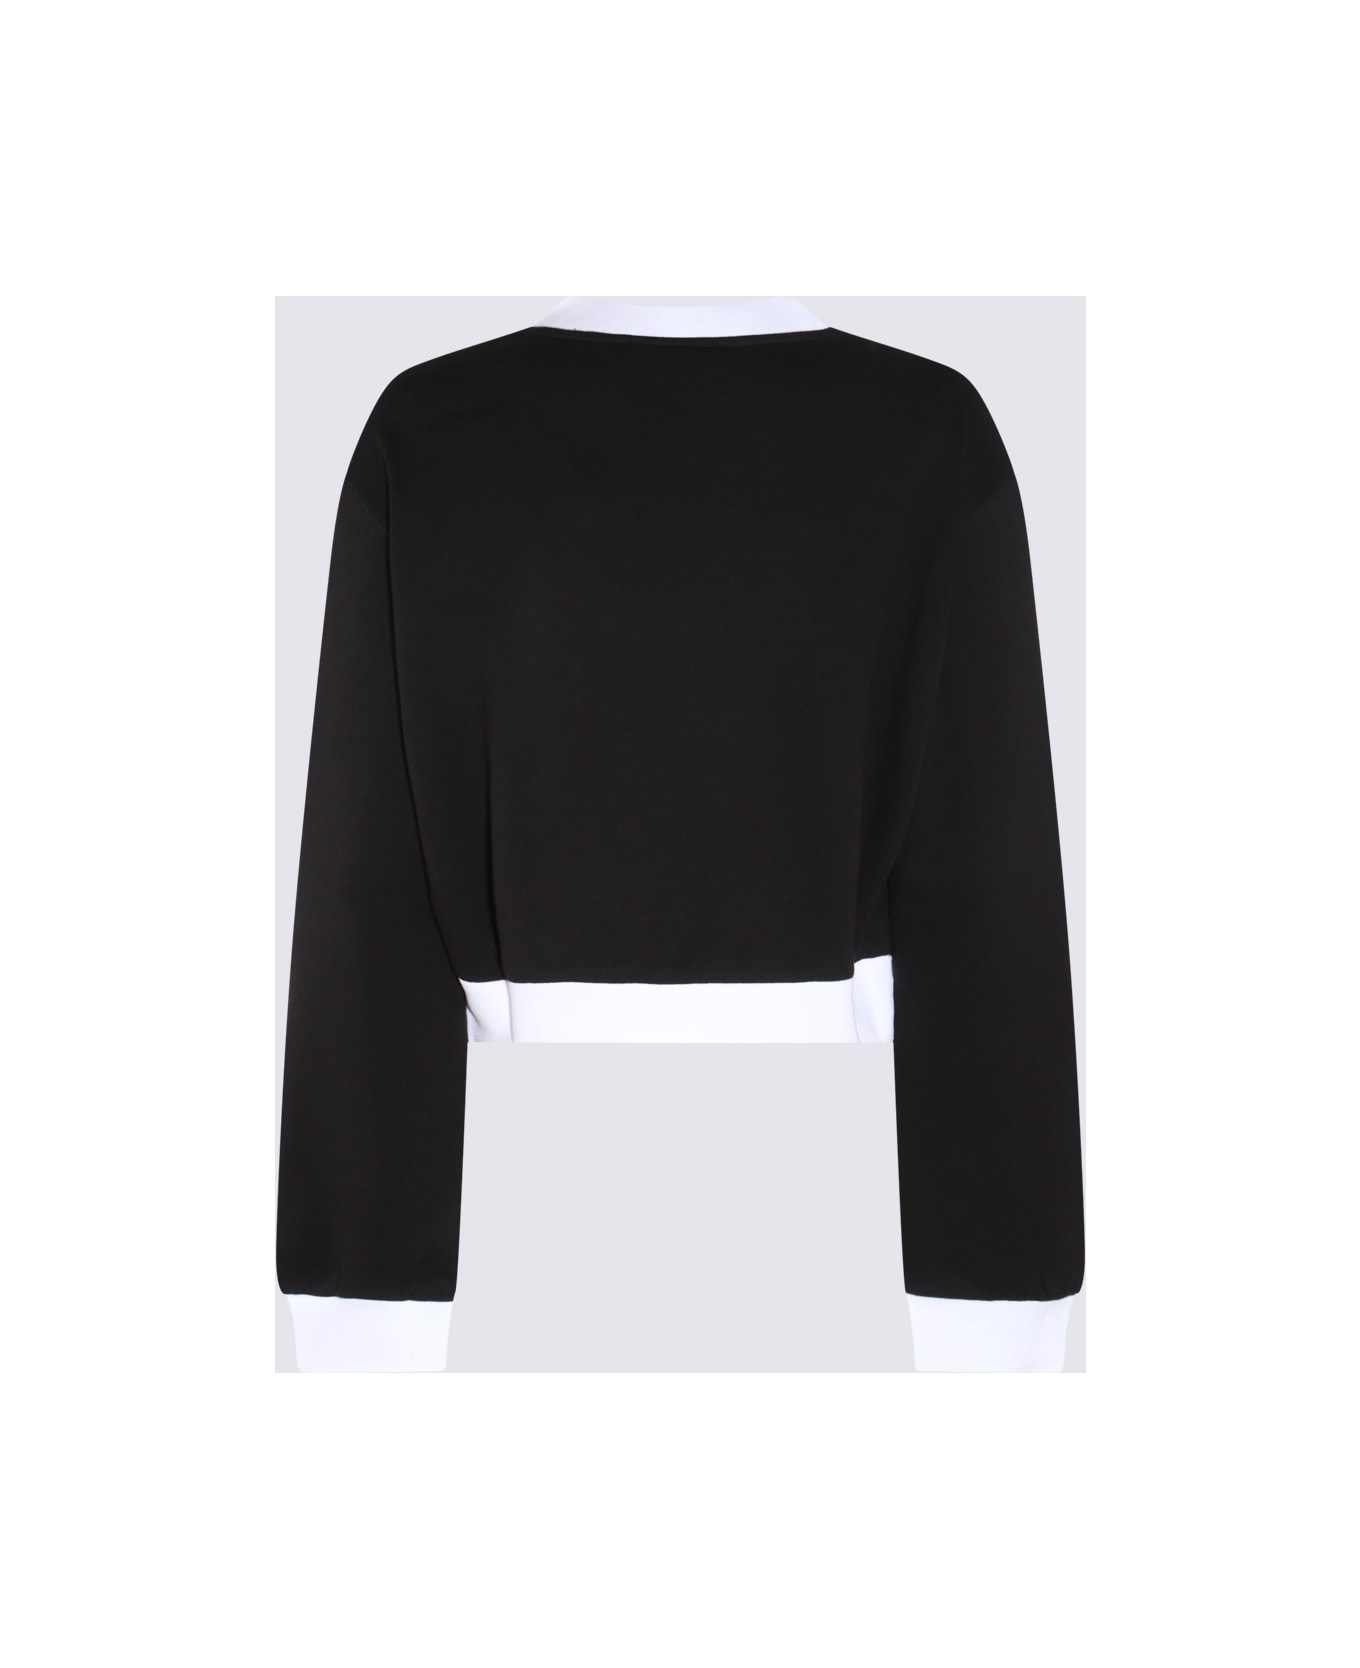 Dolce & Gabbana Black And White Cotton Sweatshirt - Nero/bianco